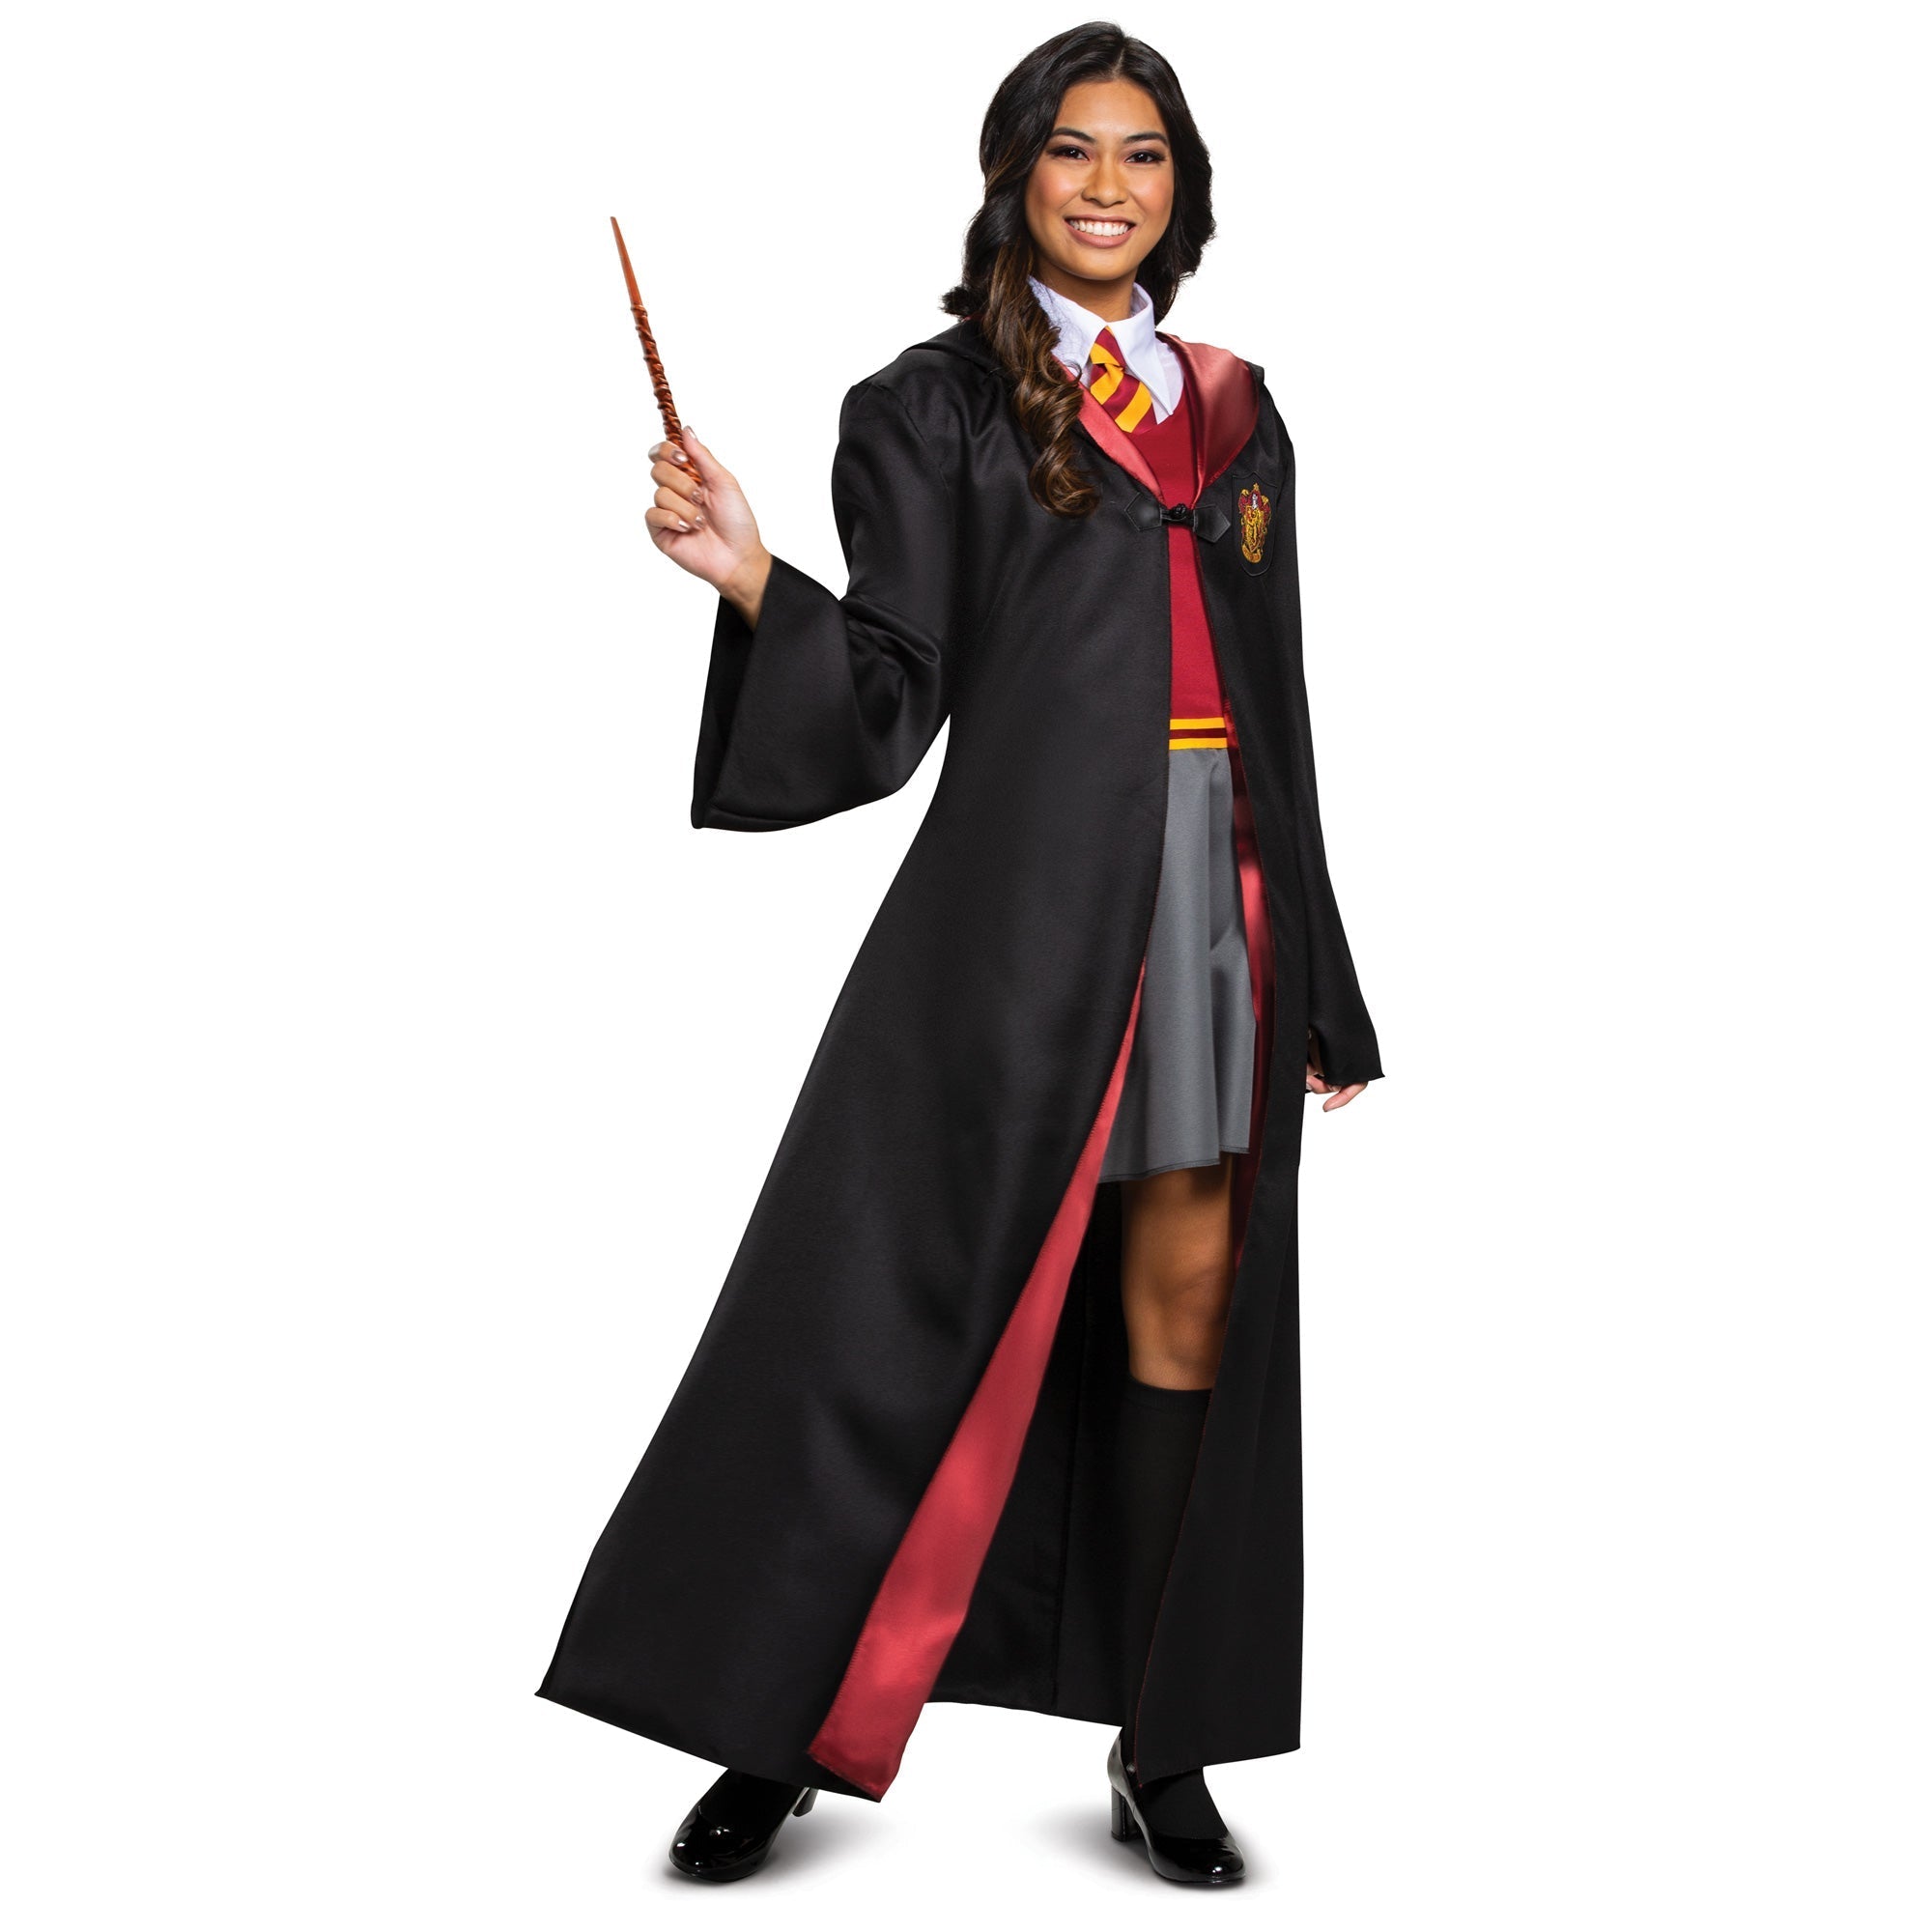 Robe Gryffondor pour adultes taille plus, Harry Potter